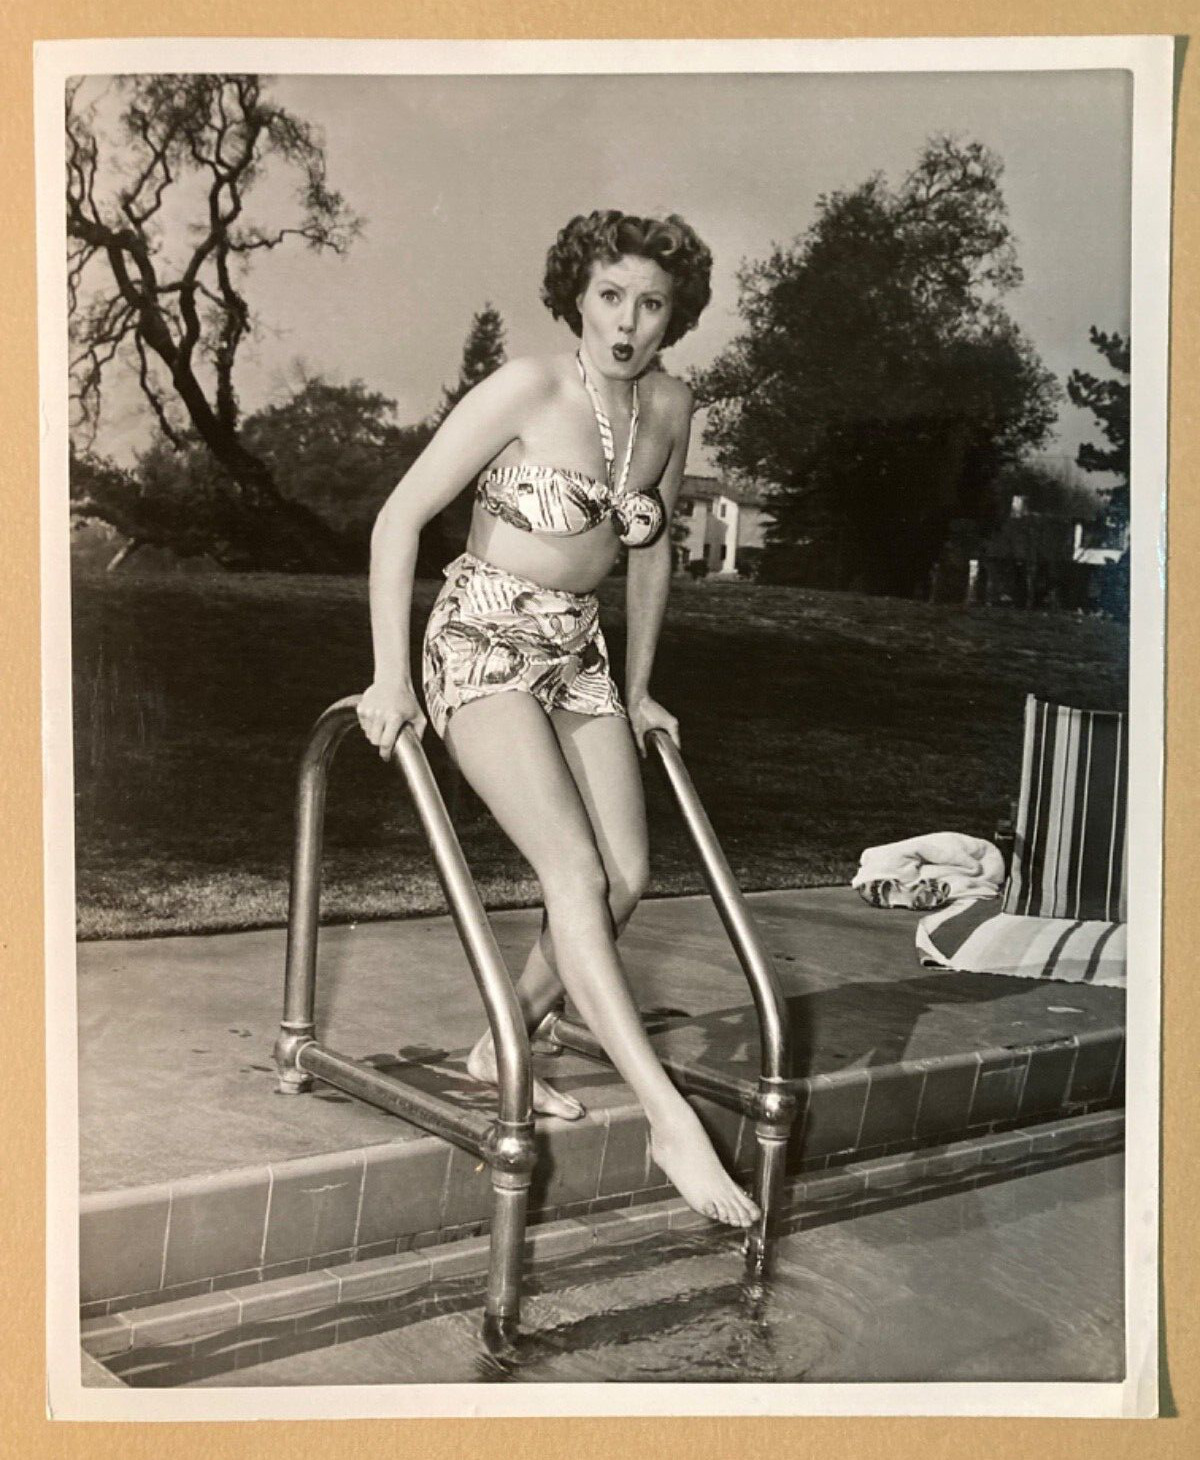 Barefoot leg art swimsuit pinup photo Rhonda Fleming poolside fun 1940’s